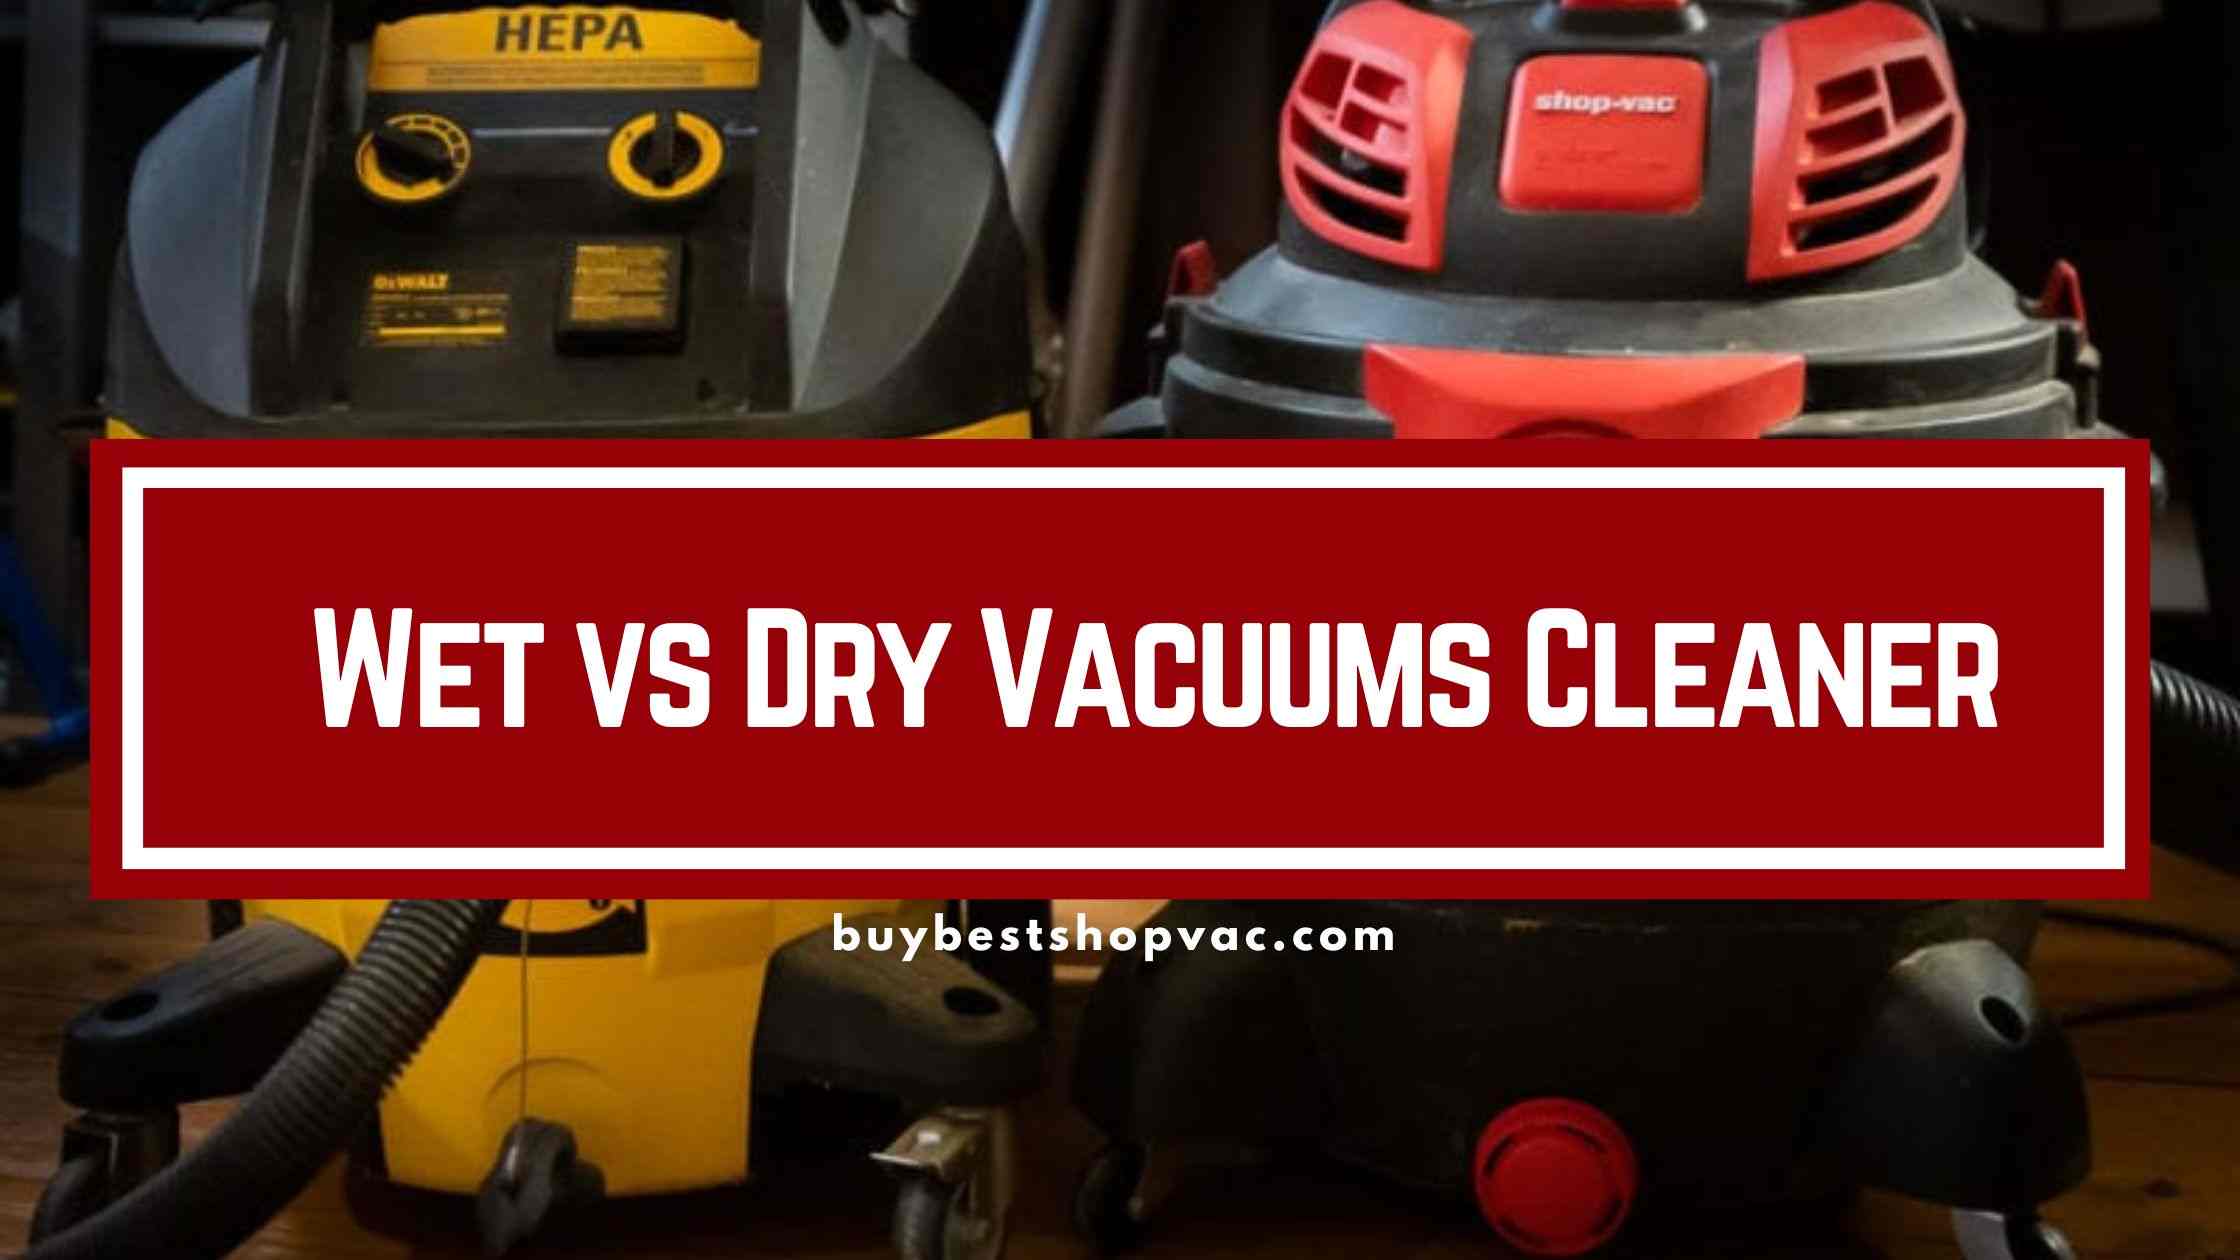 Wet vs Dry Vacuums Cleaner